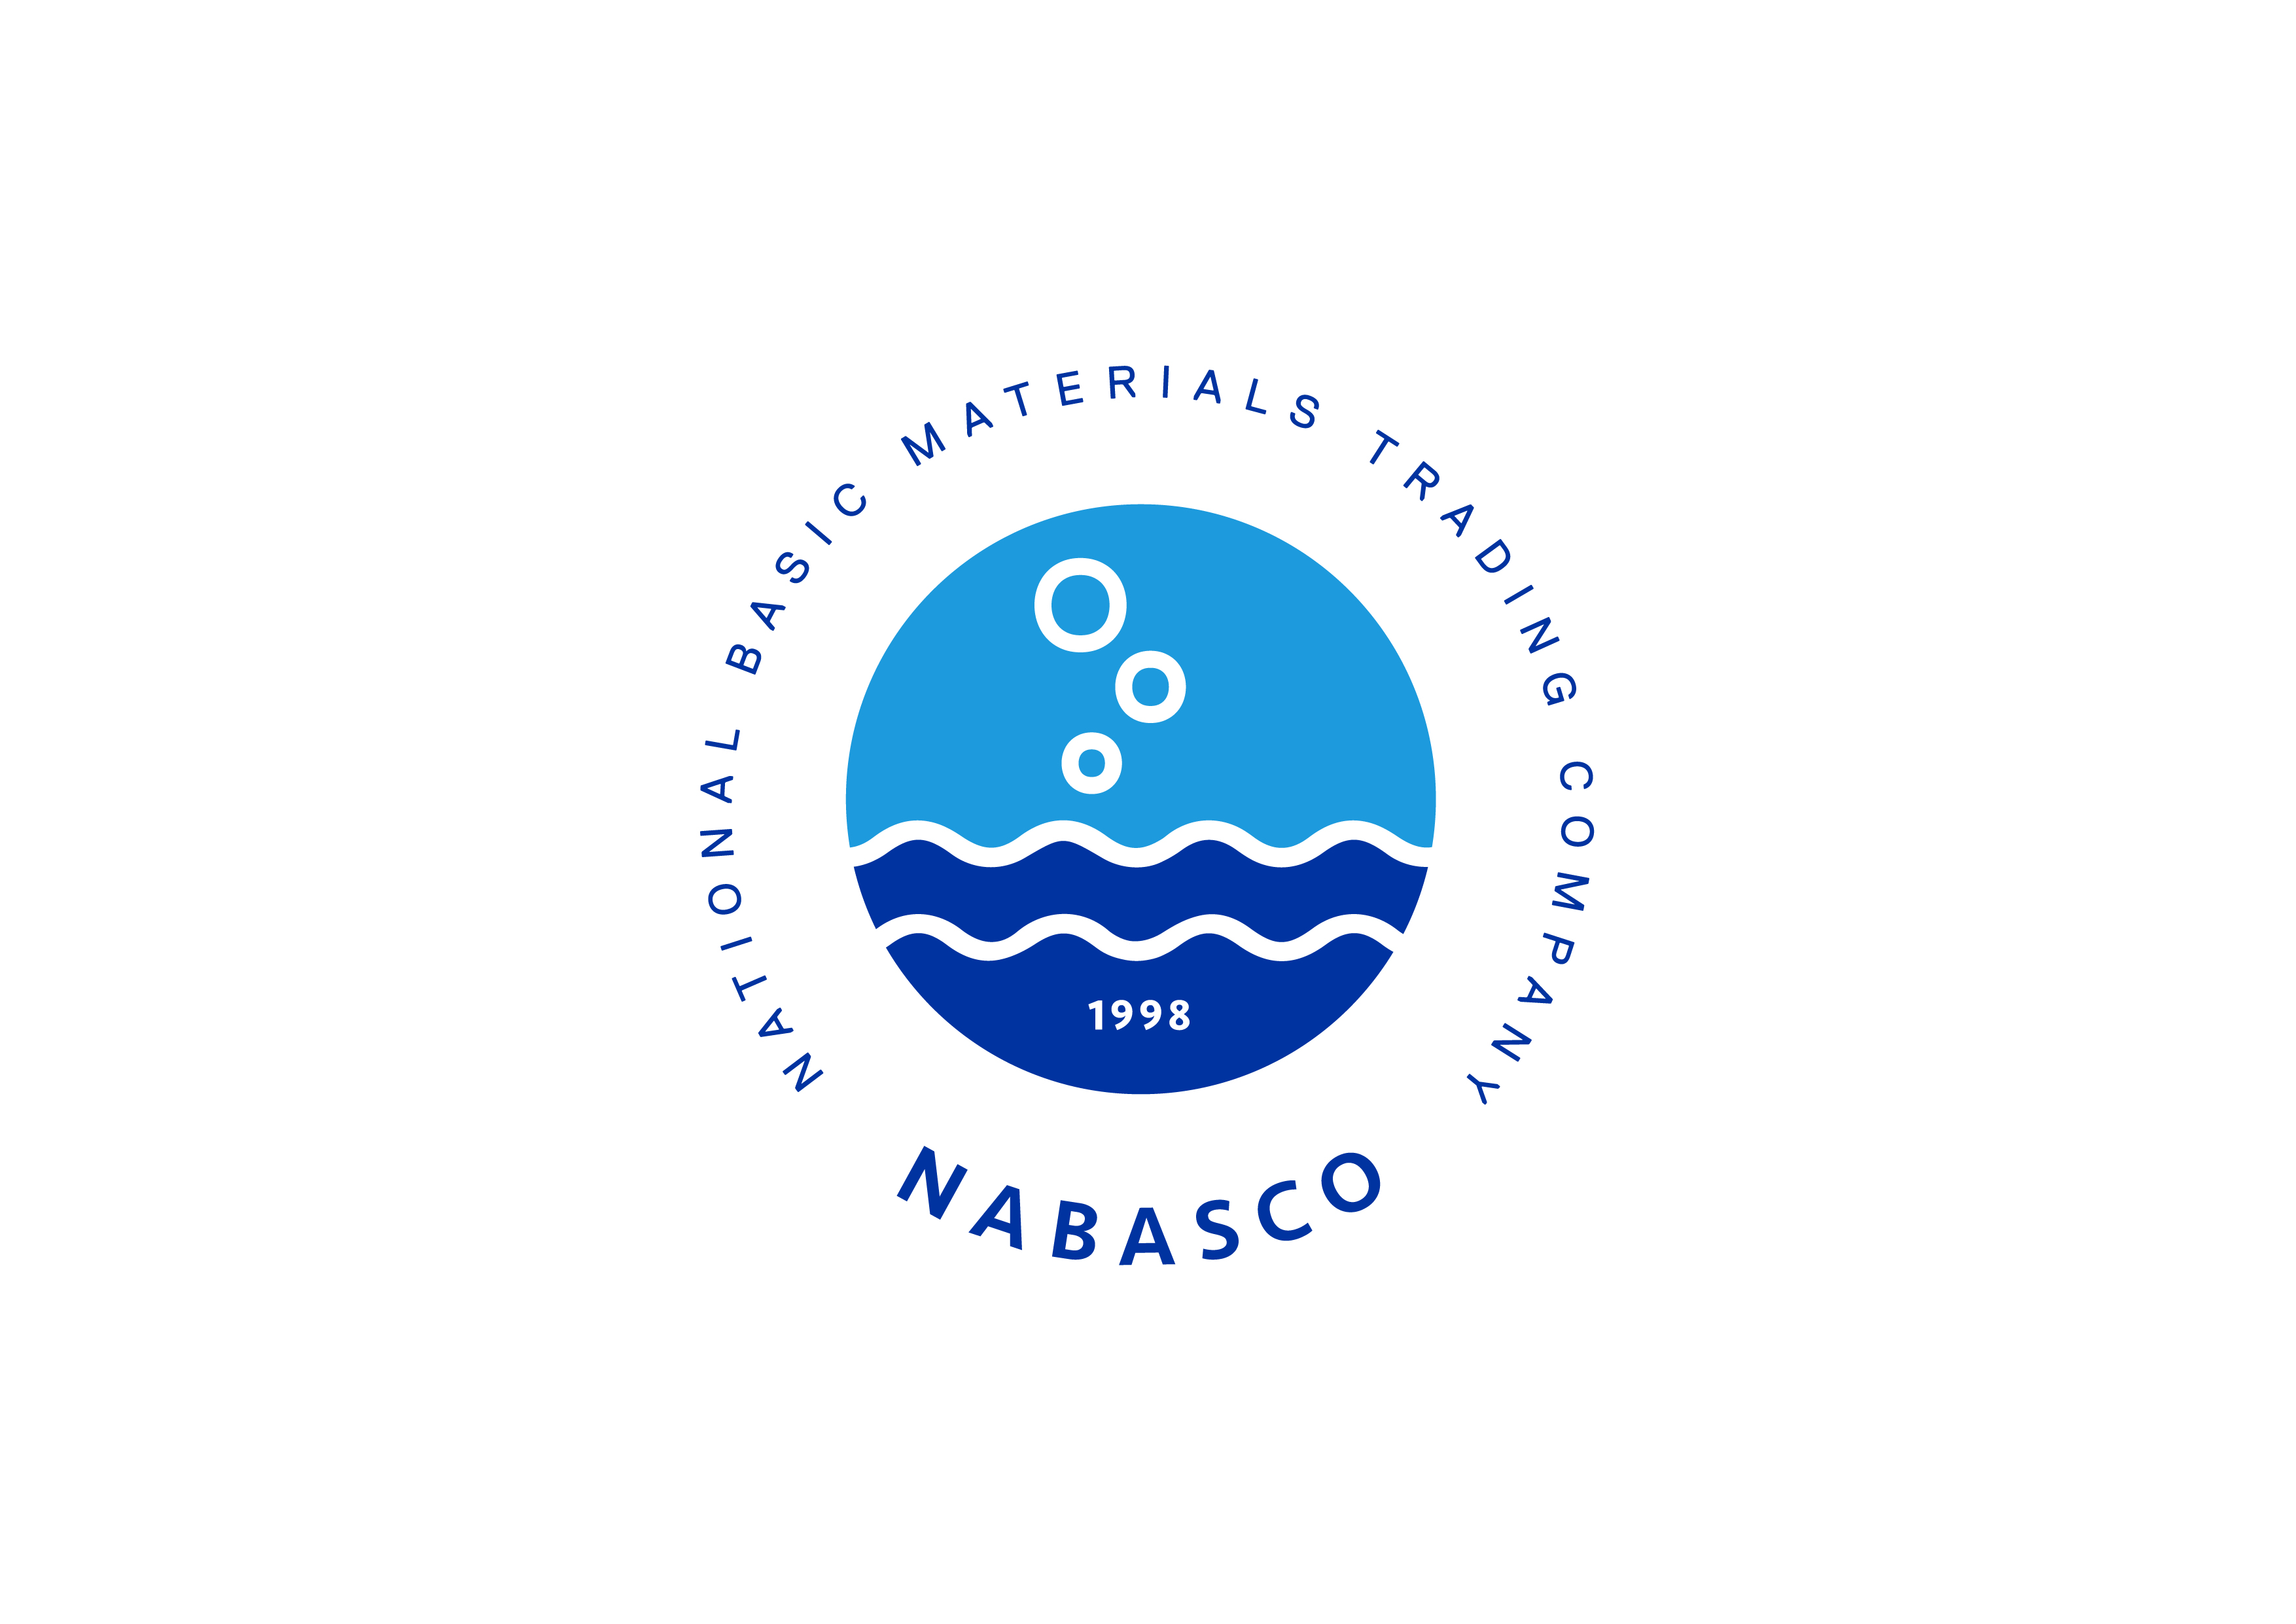 NABASCO National Basic Materials Company - Logo.jpg